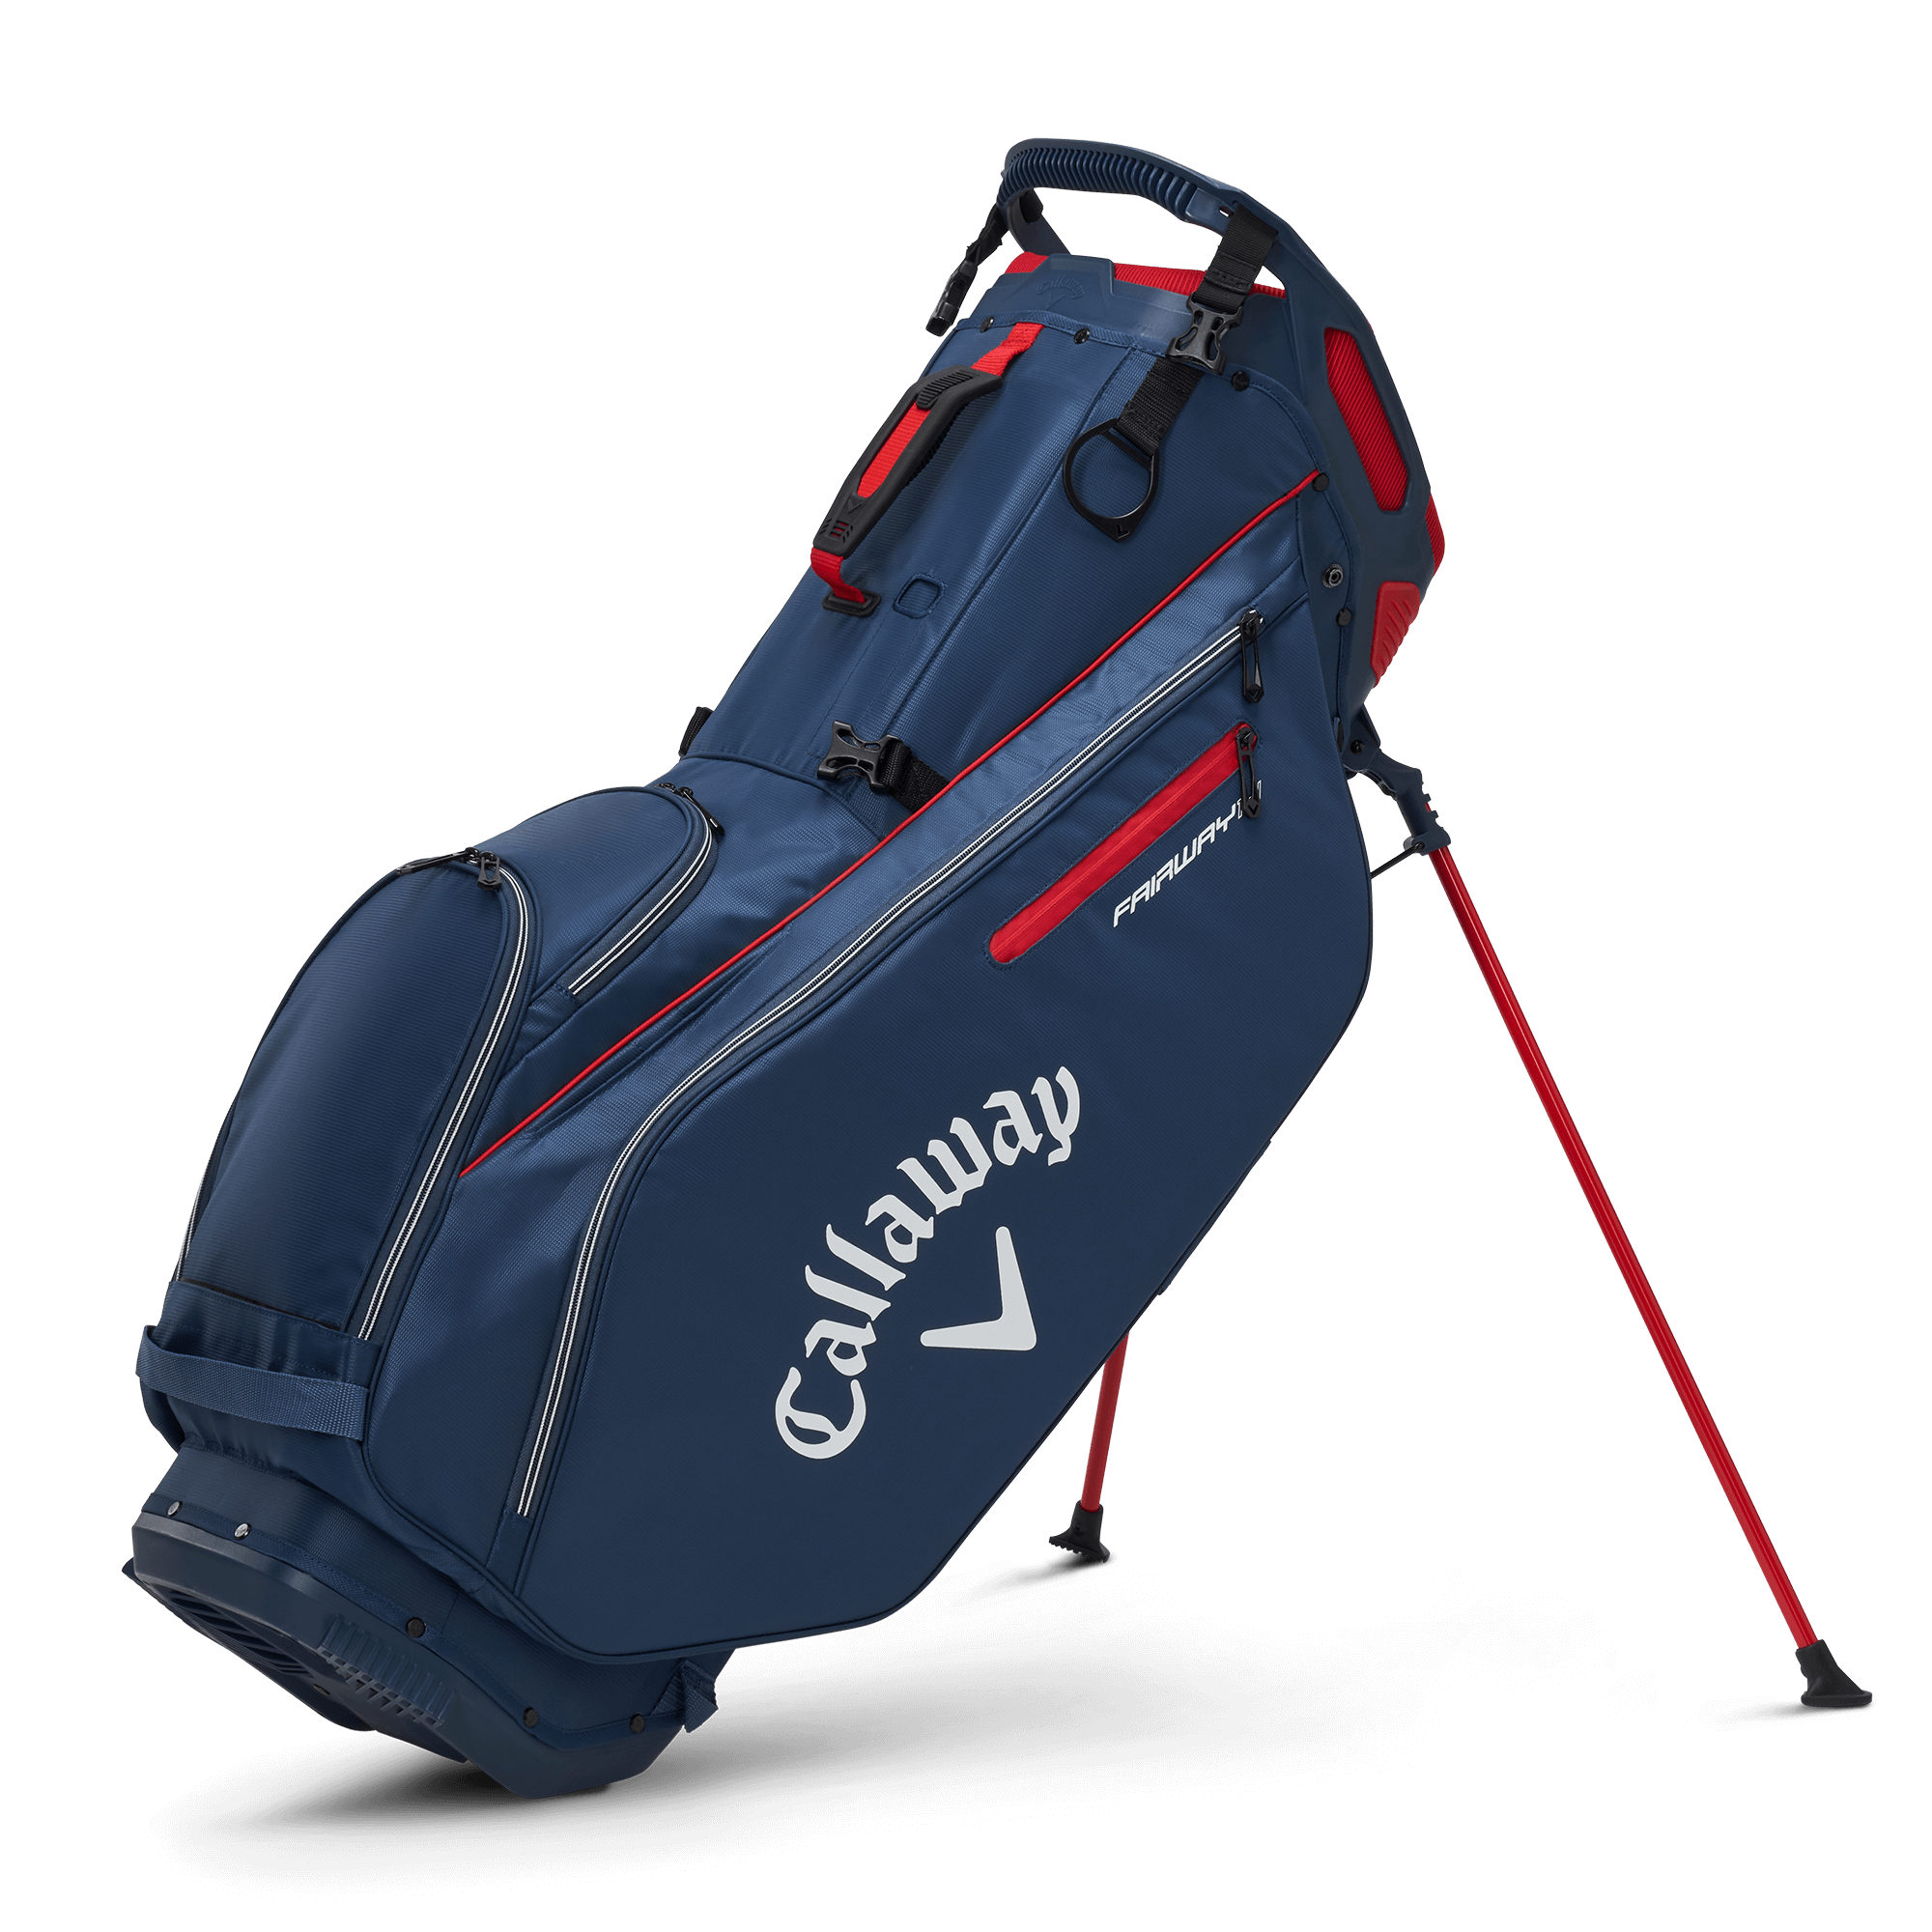 Single Strap for Golf Bags - Worldwide Golf Shops